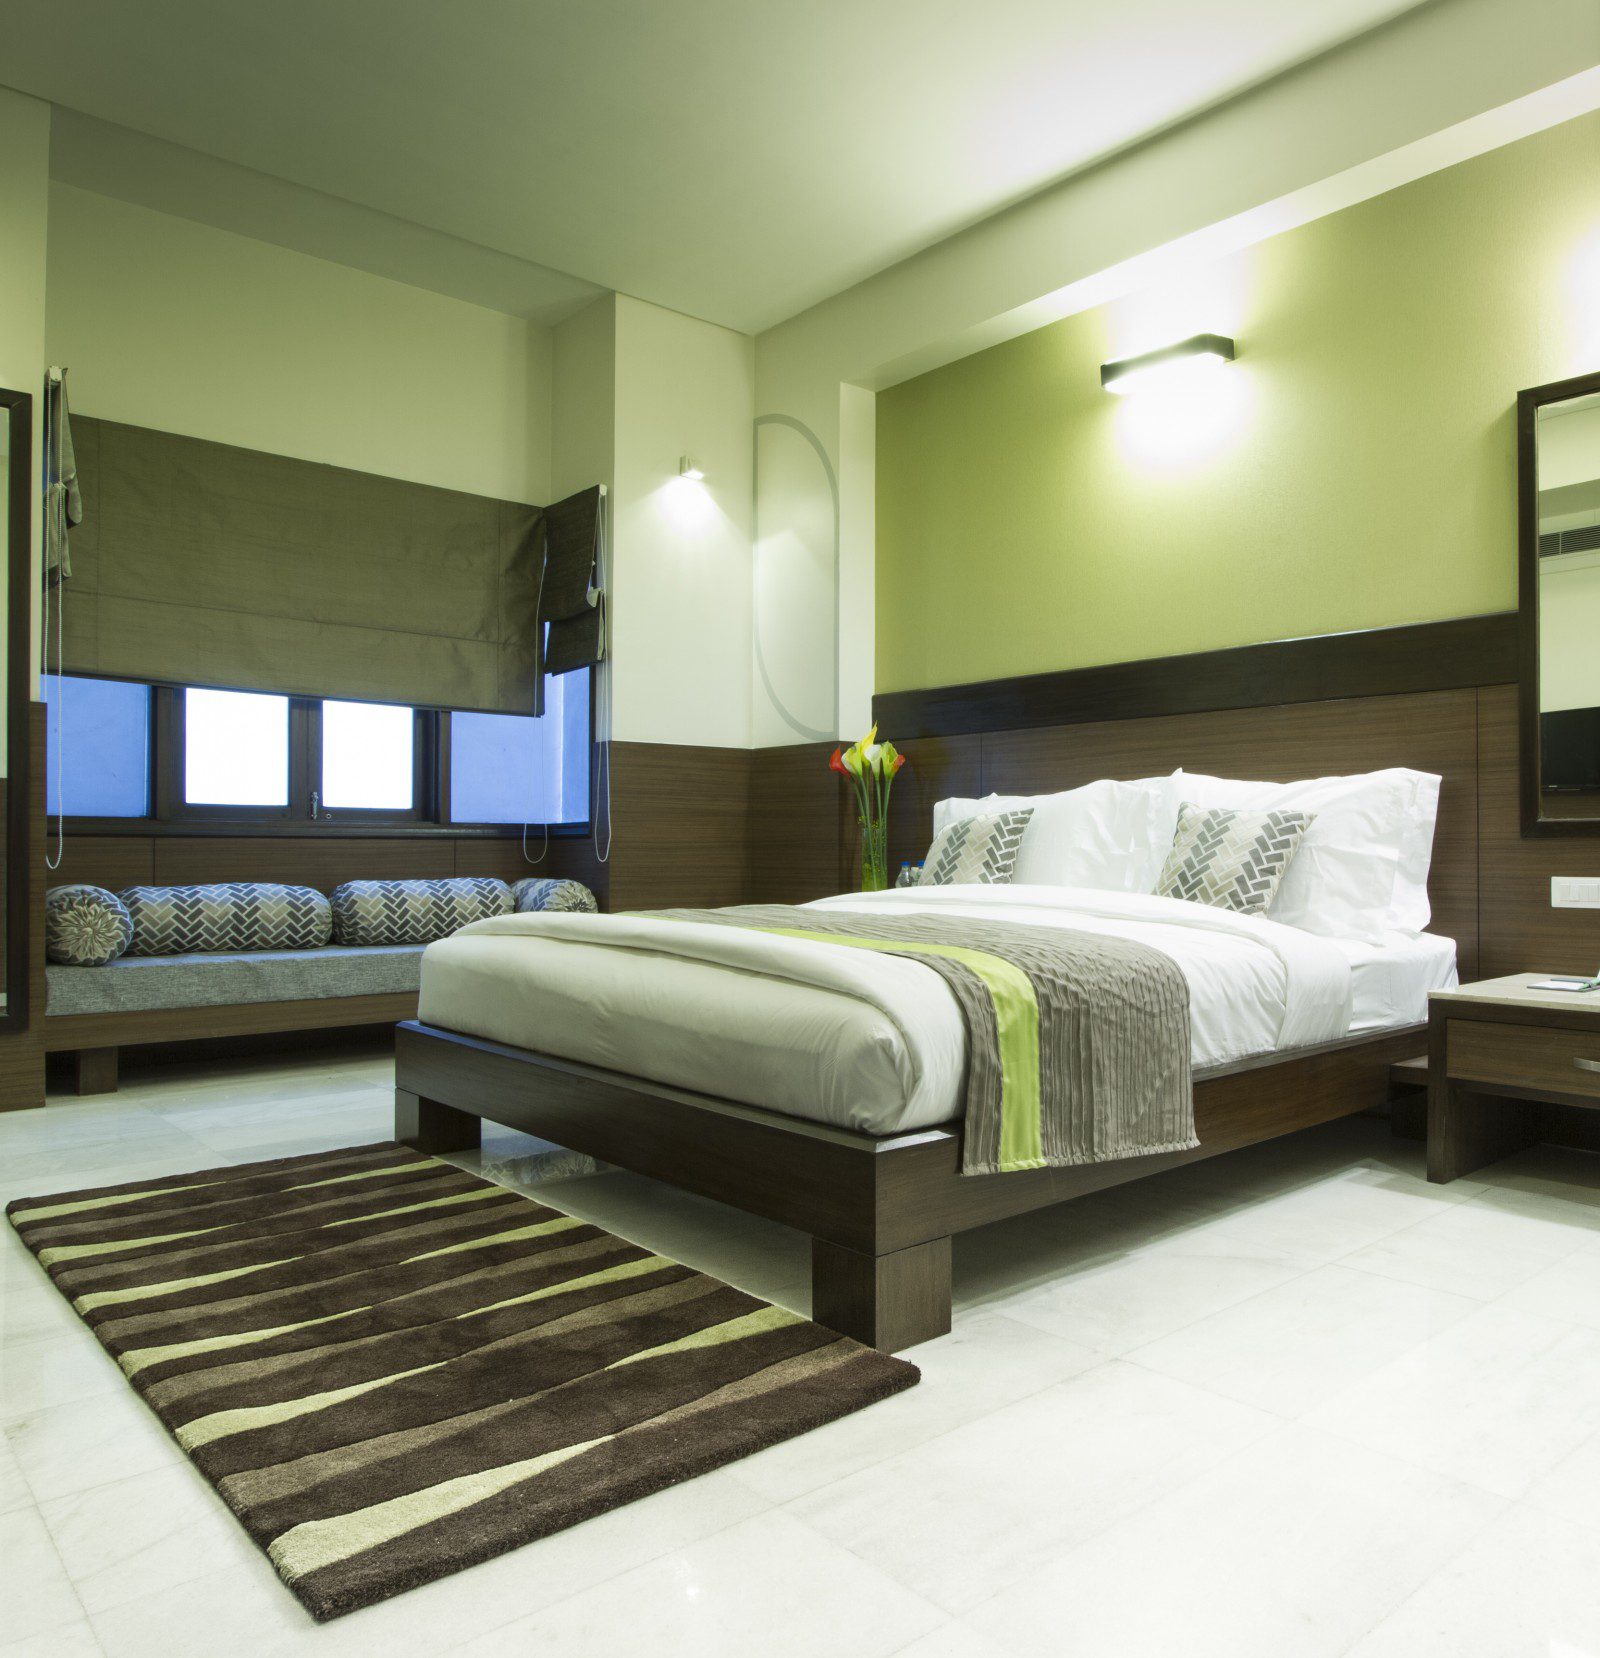 StayWell Hospitality Group's Leisure Inn Grand Chanakya in Jaipur Celebrates 1st Anniversary